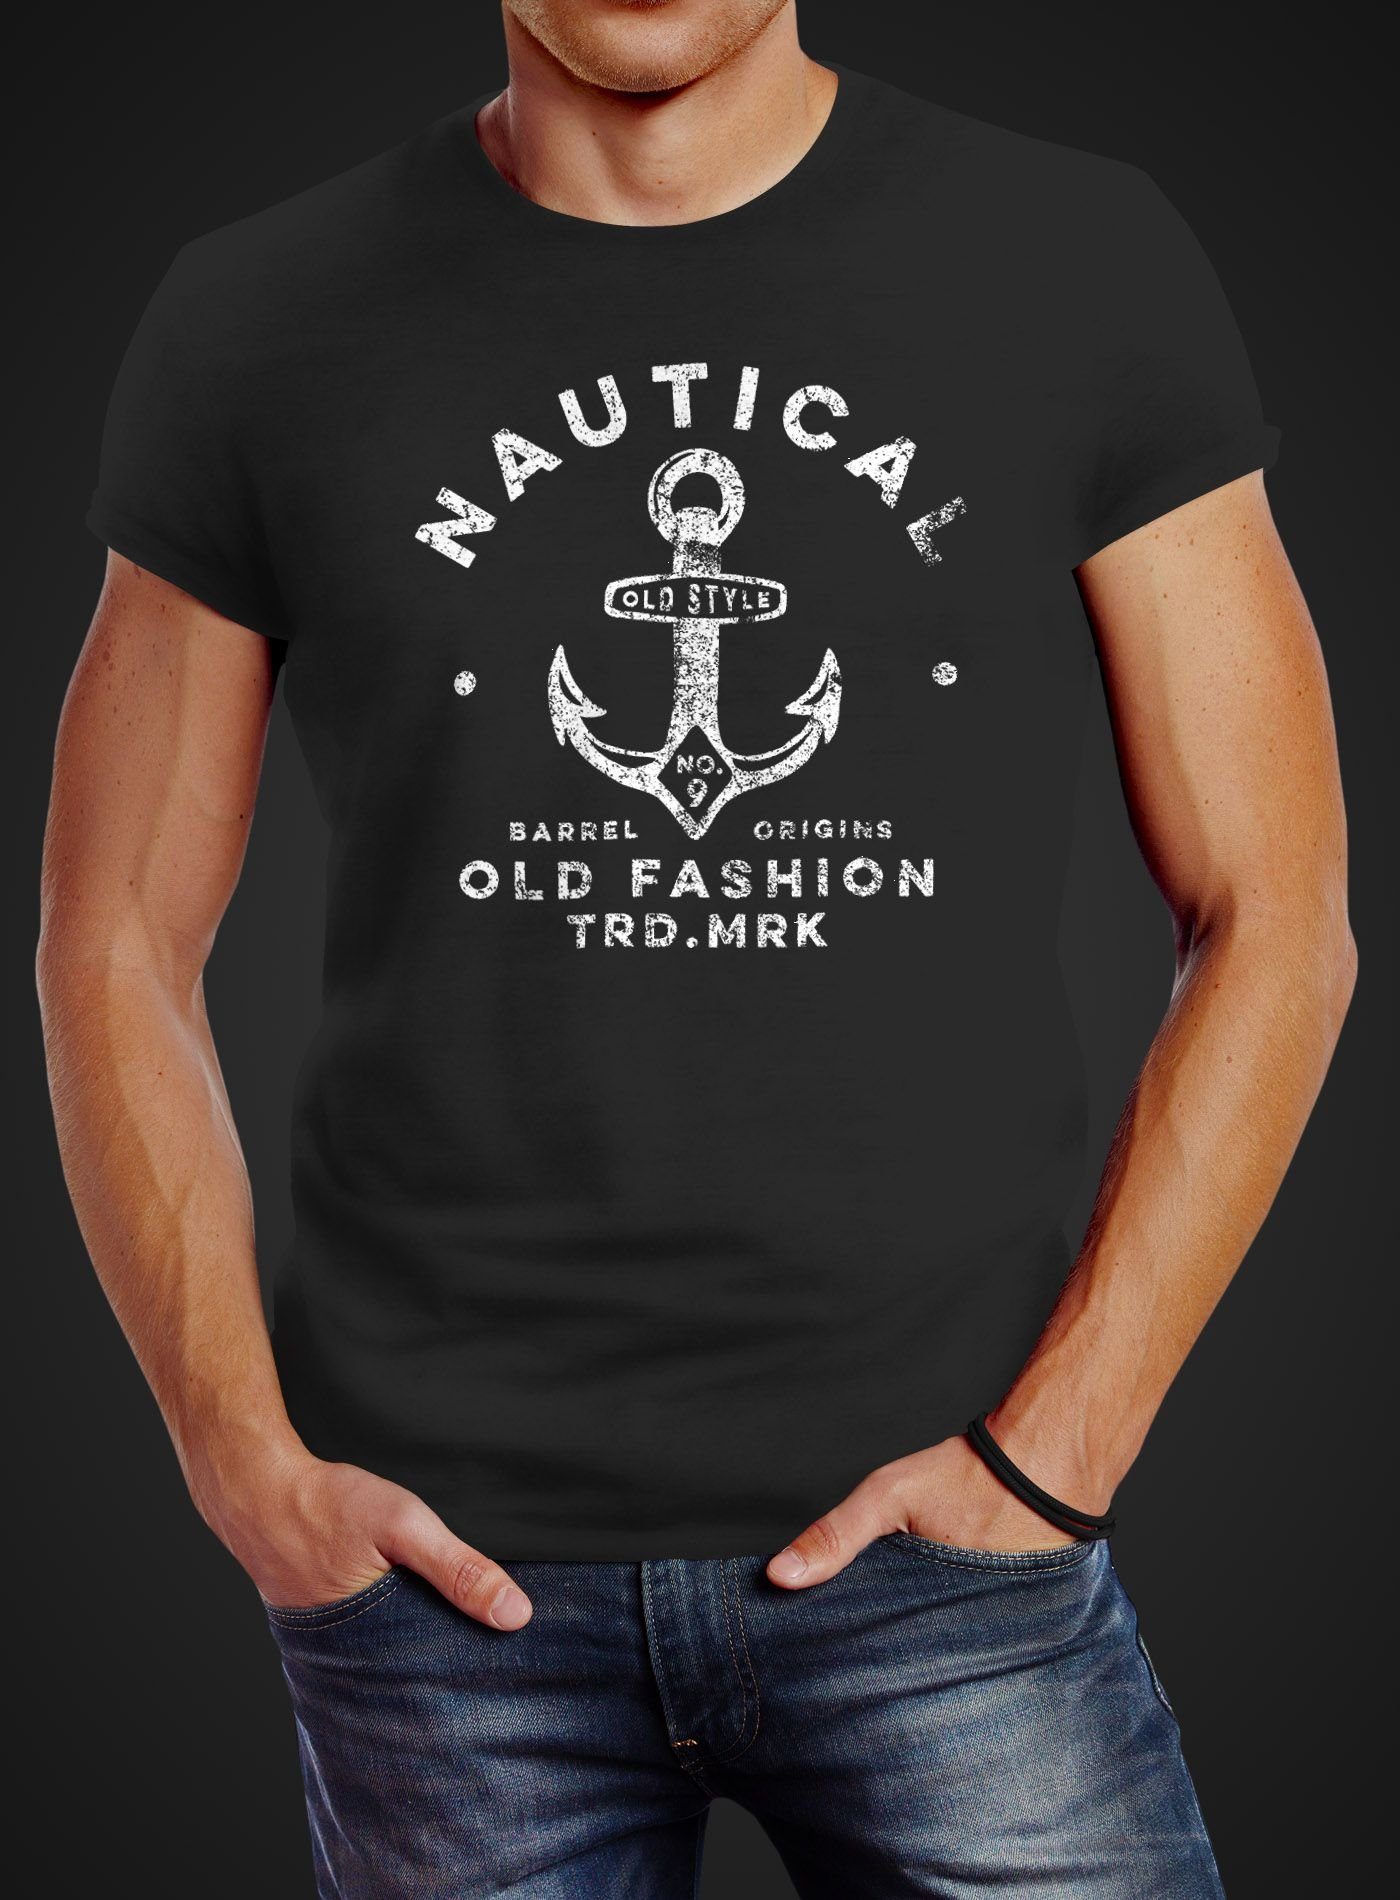 T-Shirt Anker Print Retro mit Neverless Neverless® Print-Shirt Fashion Design Herren Schriftzug Nautical Motiv Streetstyle Old Fashion schwarz